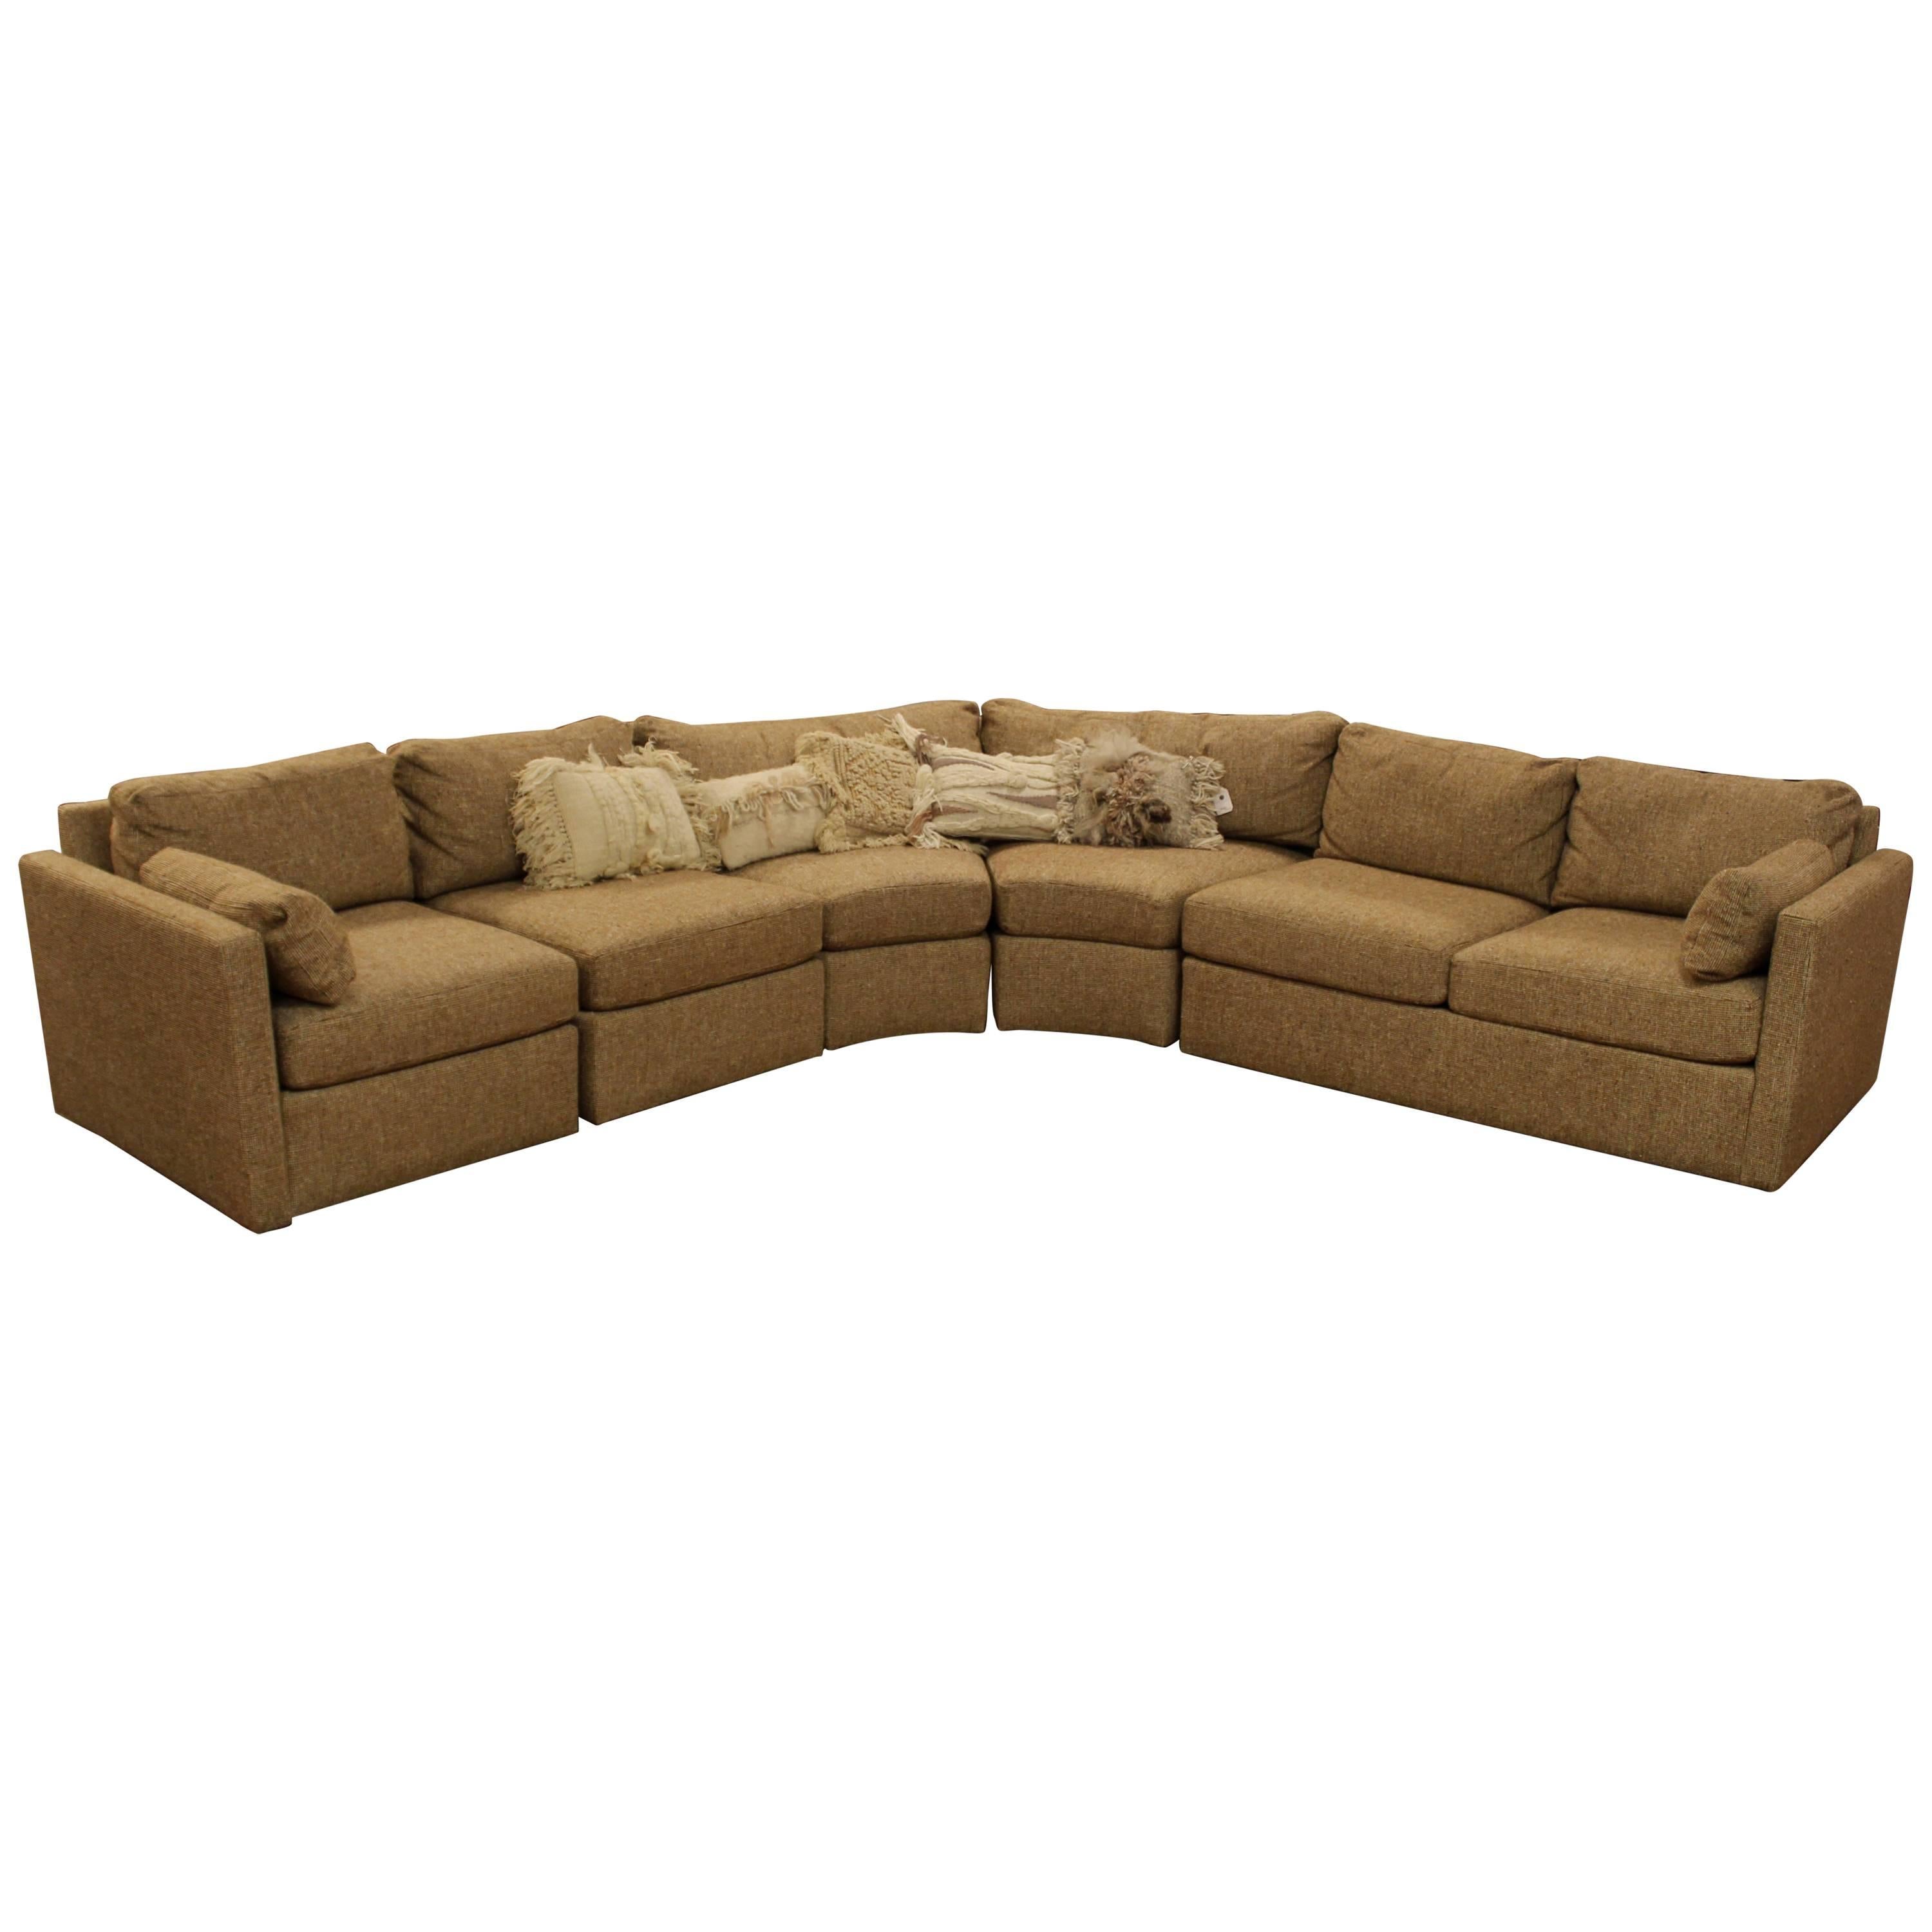 Mid-Century Modern Curved Five-Piece Sofa Sectional Drexel Baughman Era